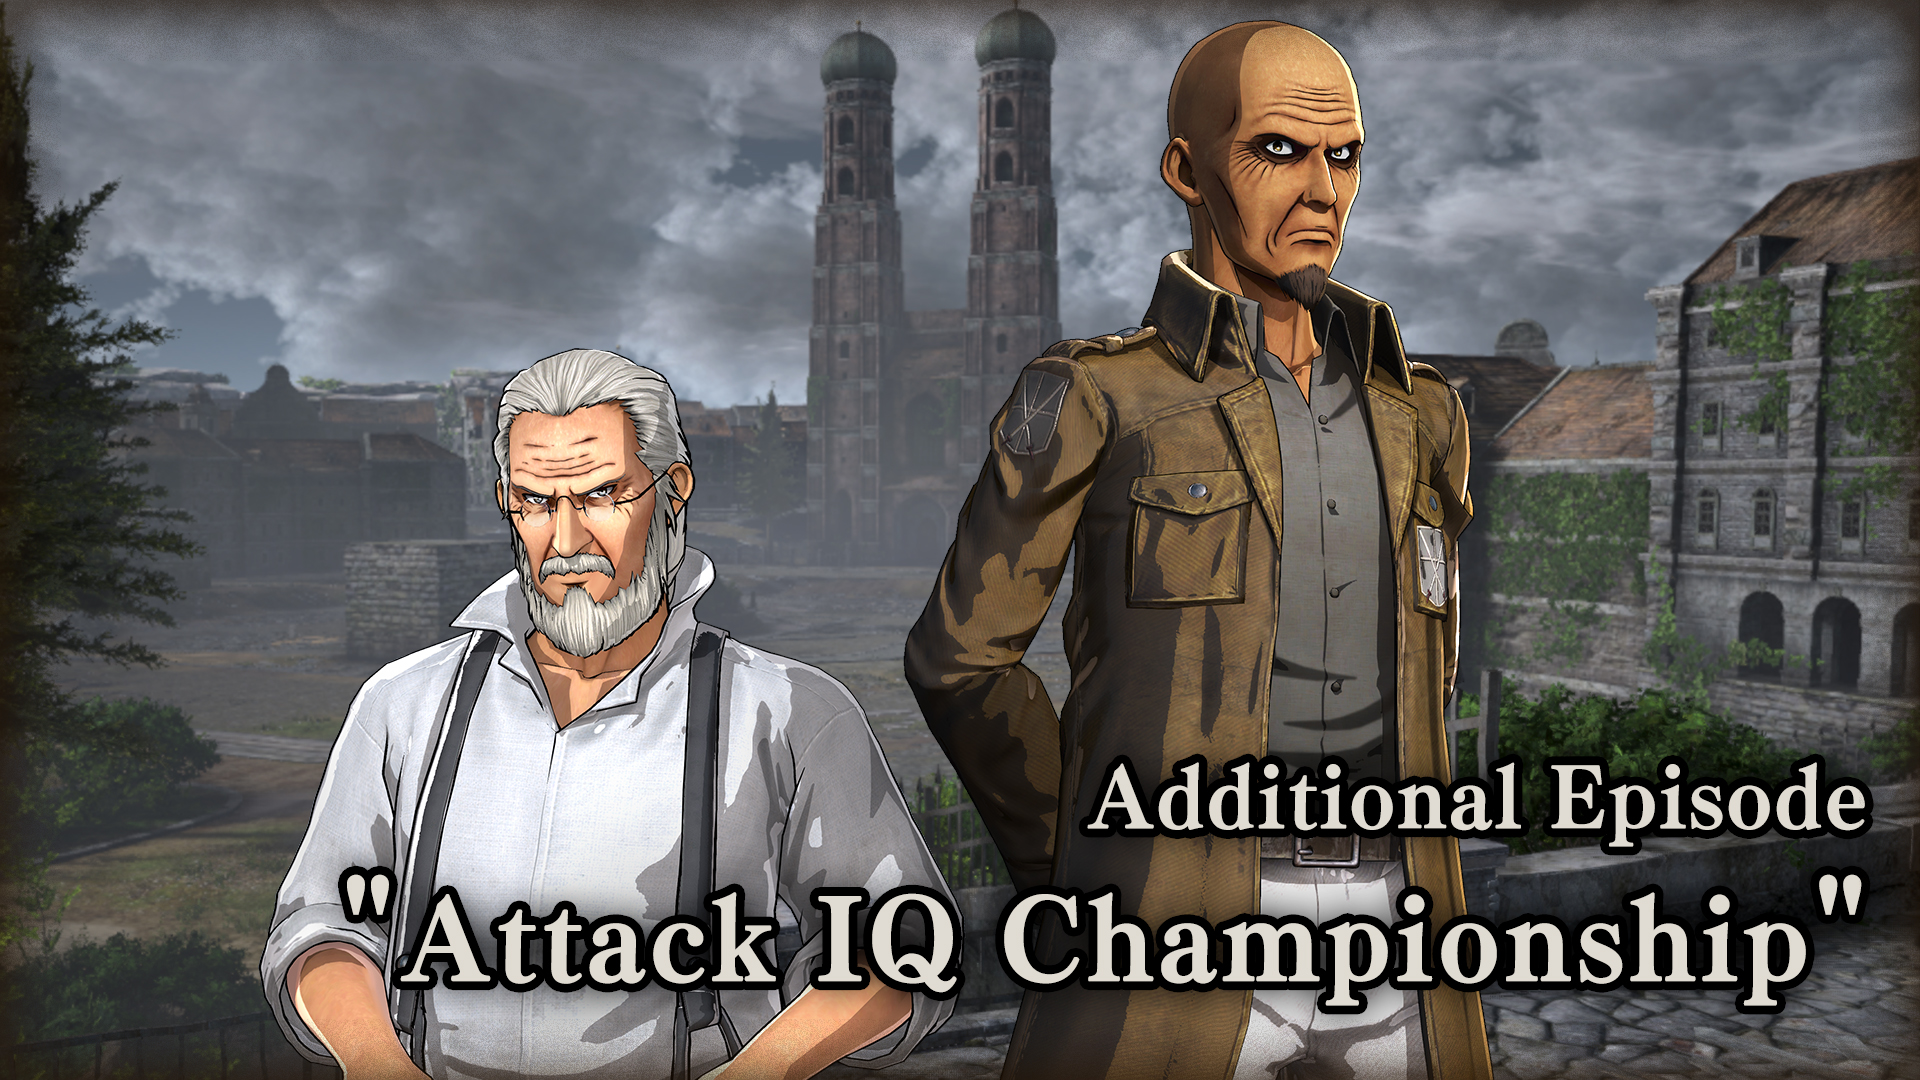 Additional Episode: "Attack IQ Championship"